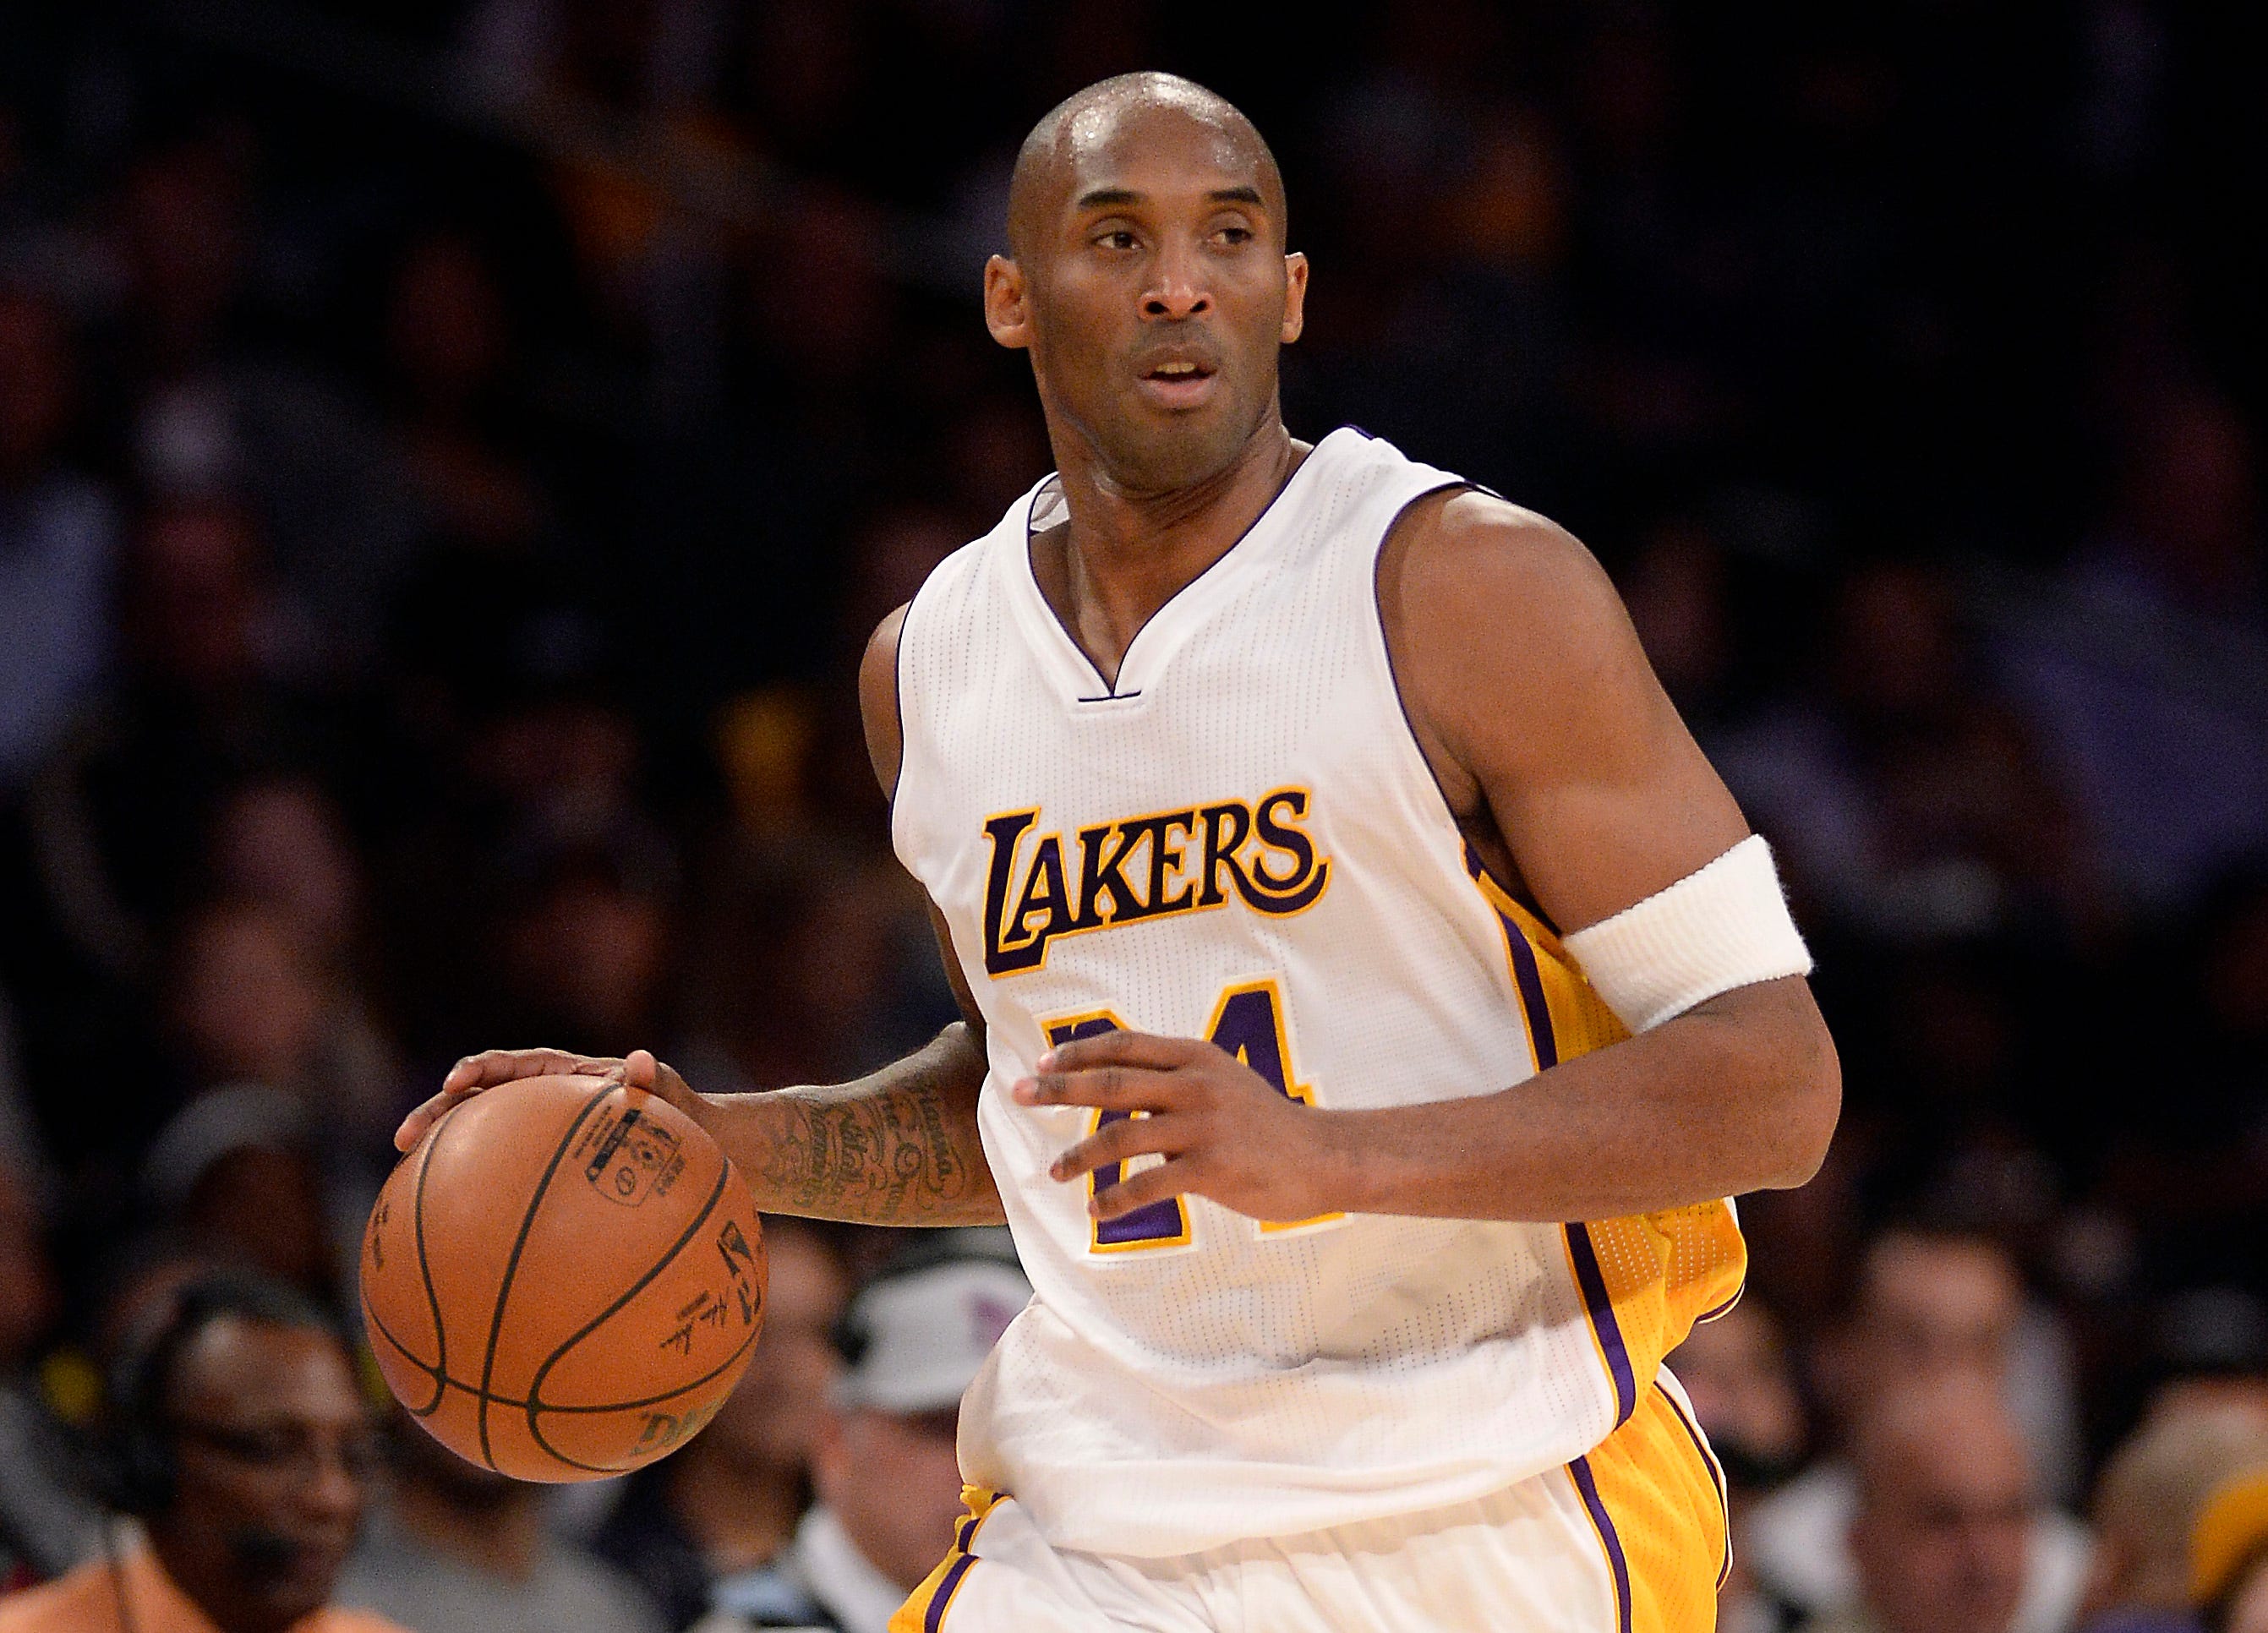 Kobe Bryant dead: Latest details on 